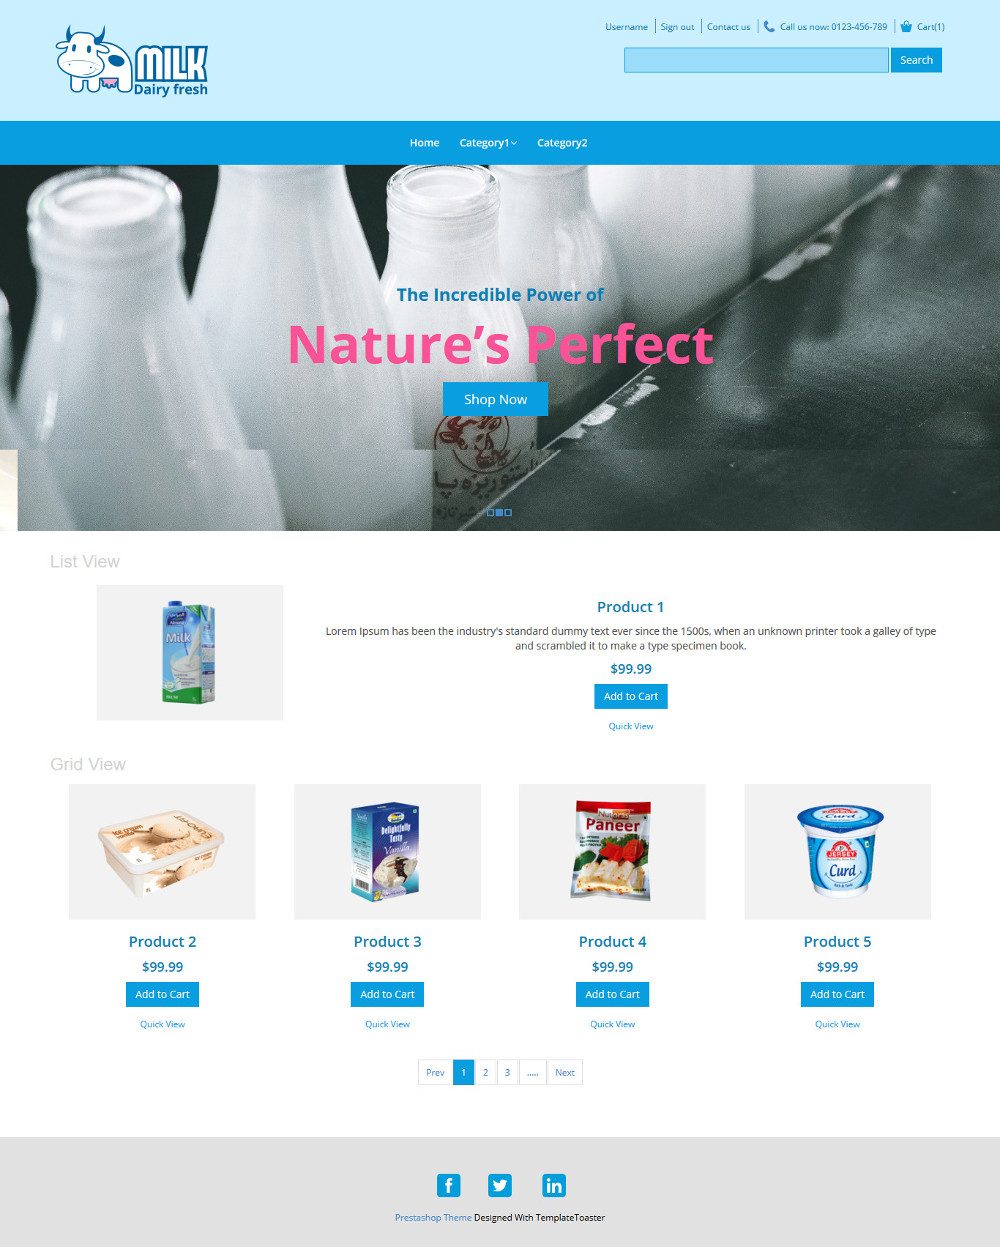 Milk Dairy Fresh Dairy Products Virtuemart Template